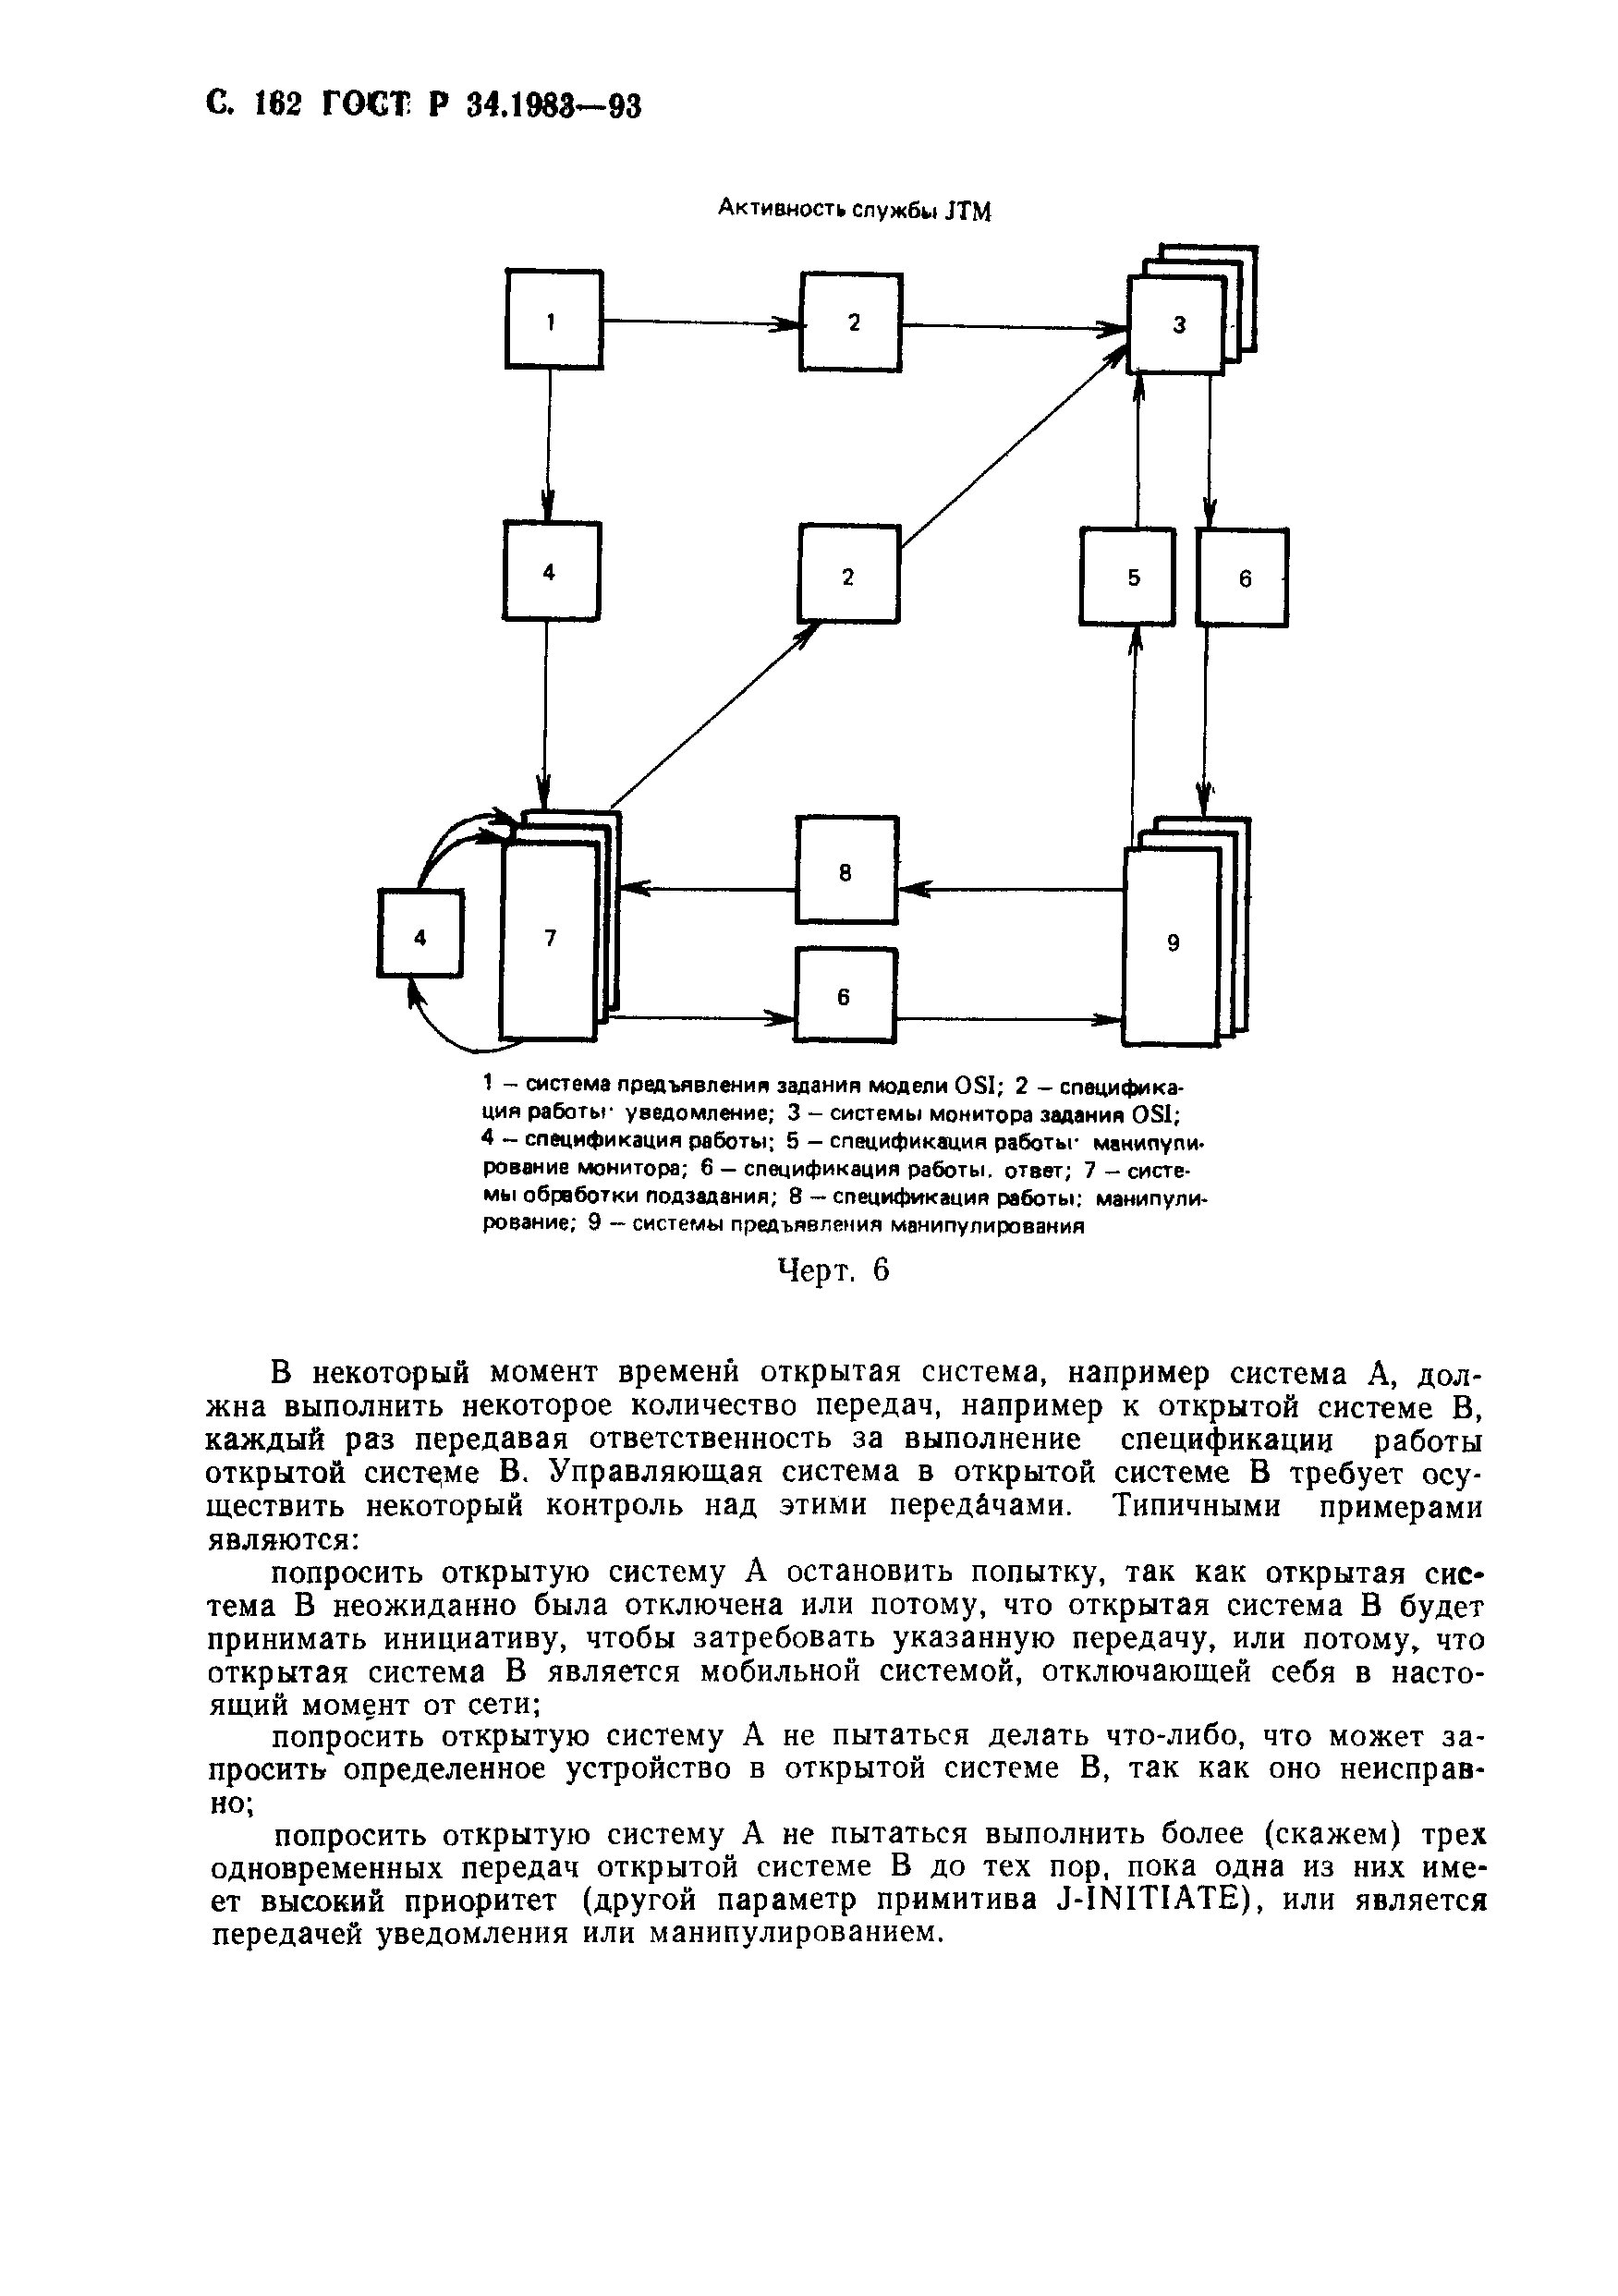 ГОСТ Р 34.1983-93. Страница 163